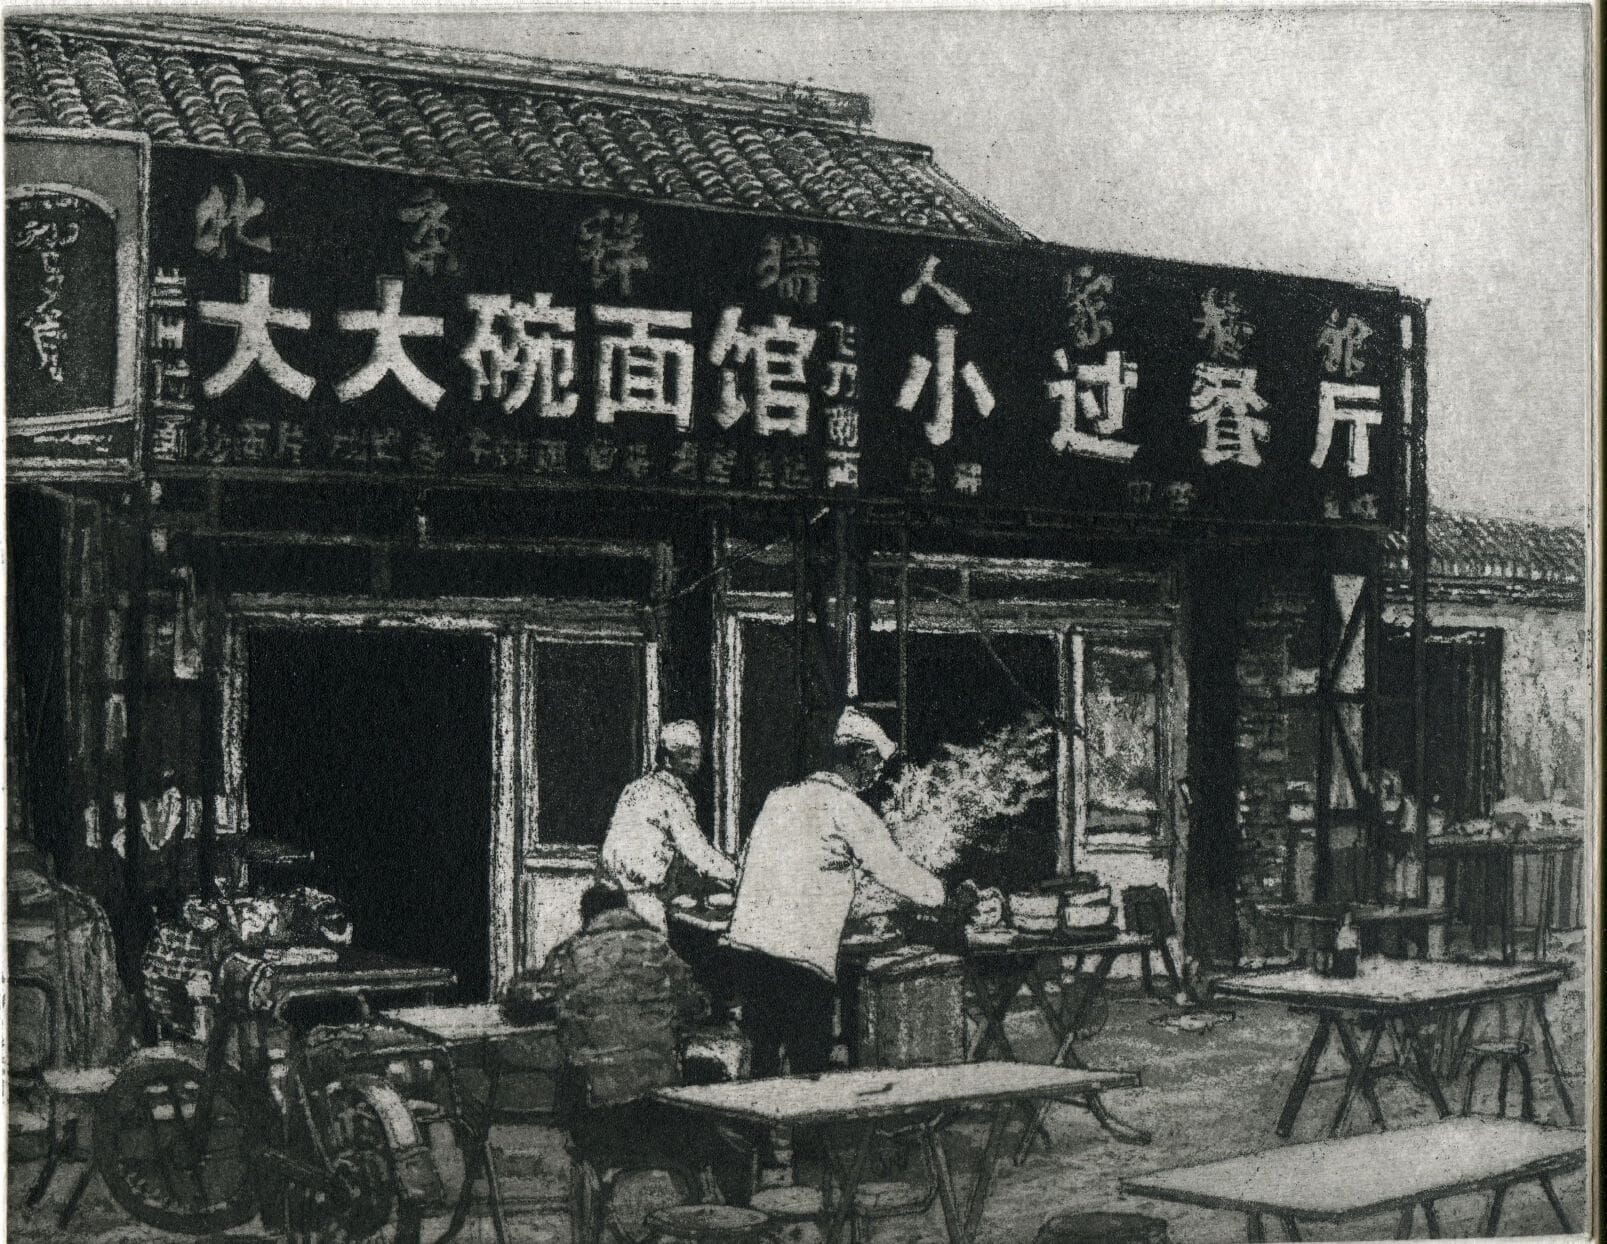  Beijing Street Cafe